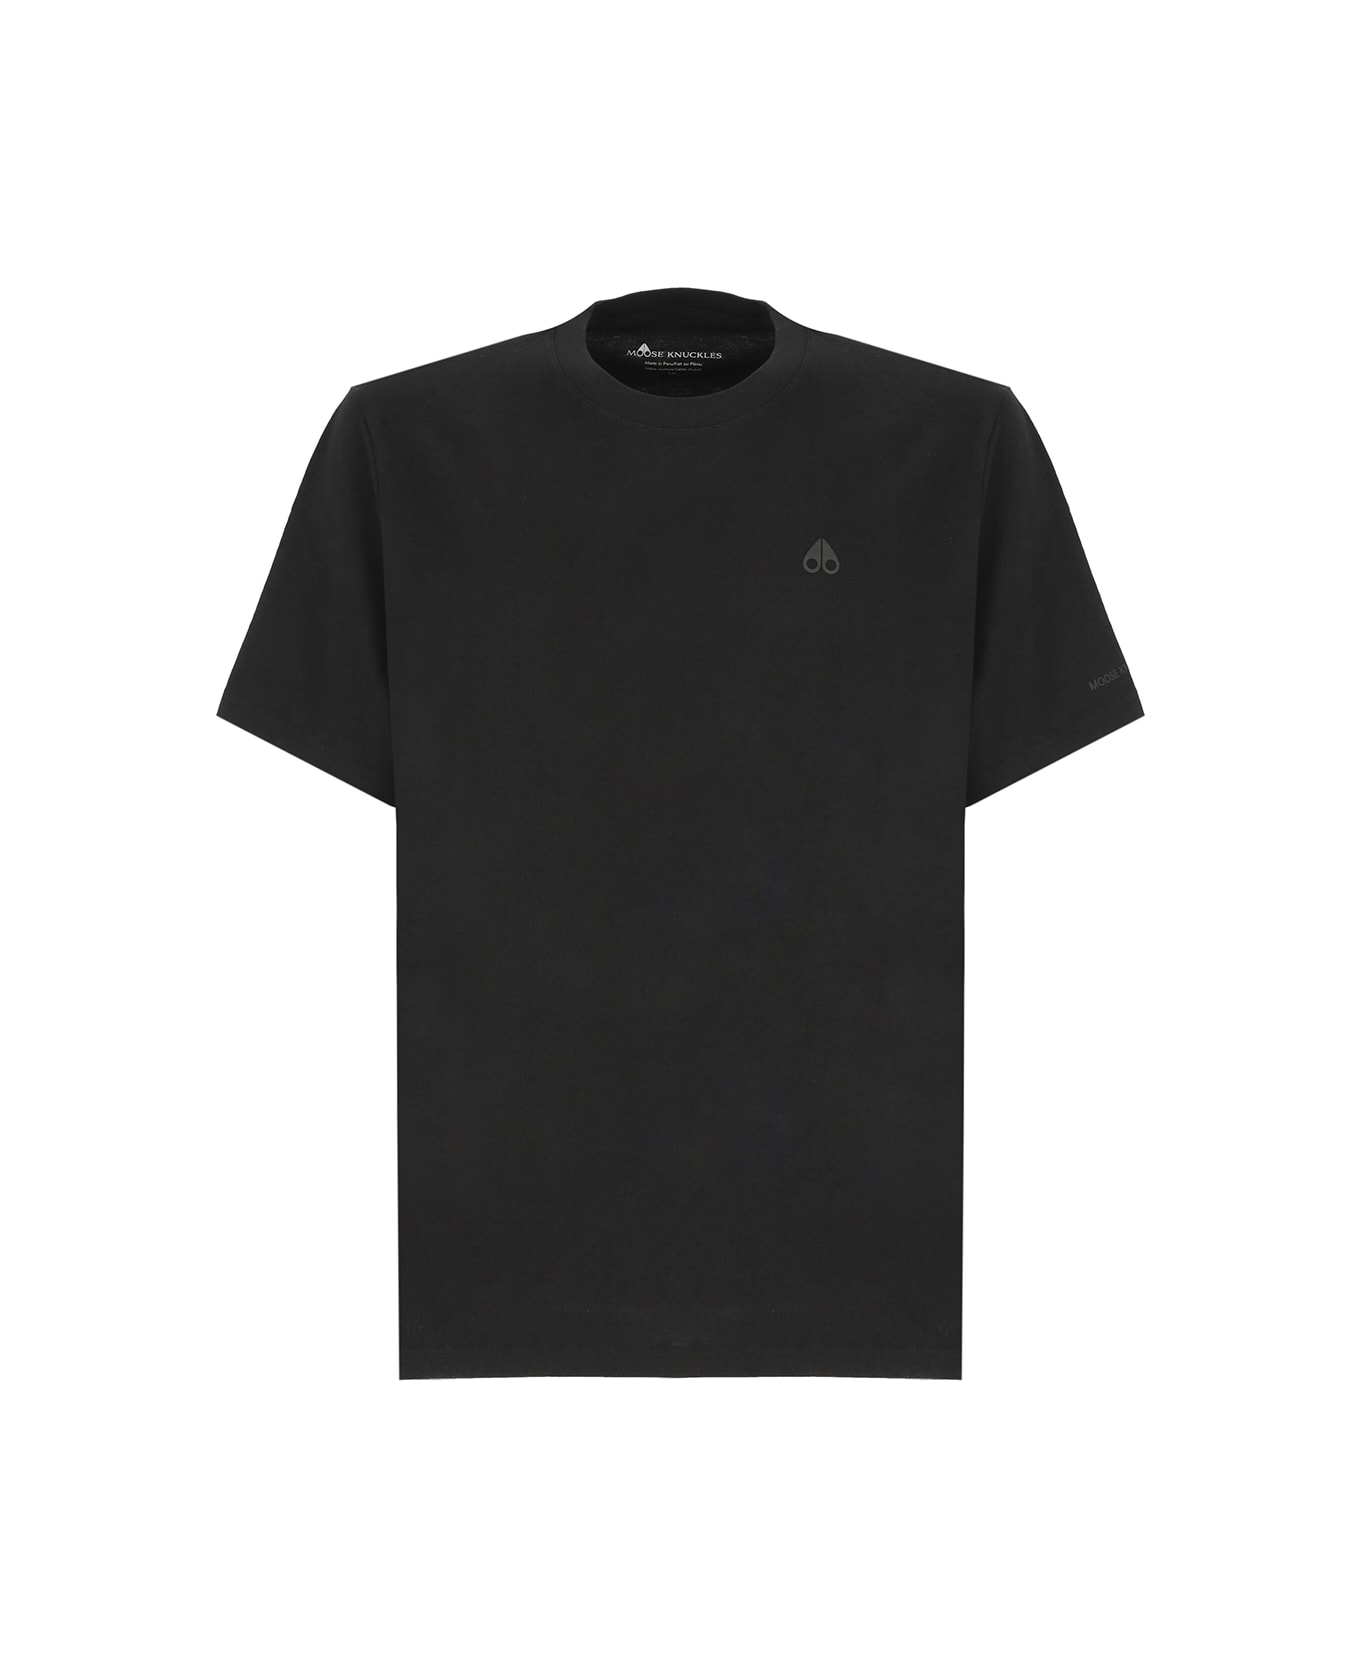 Moose Knuckles Logoed T-shirt - Black シャツ